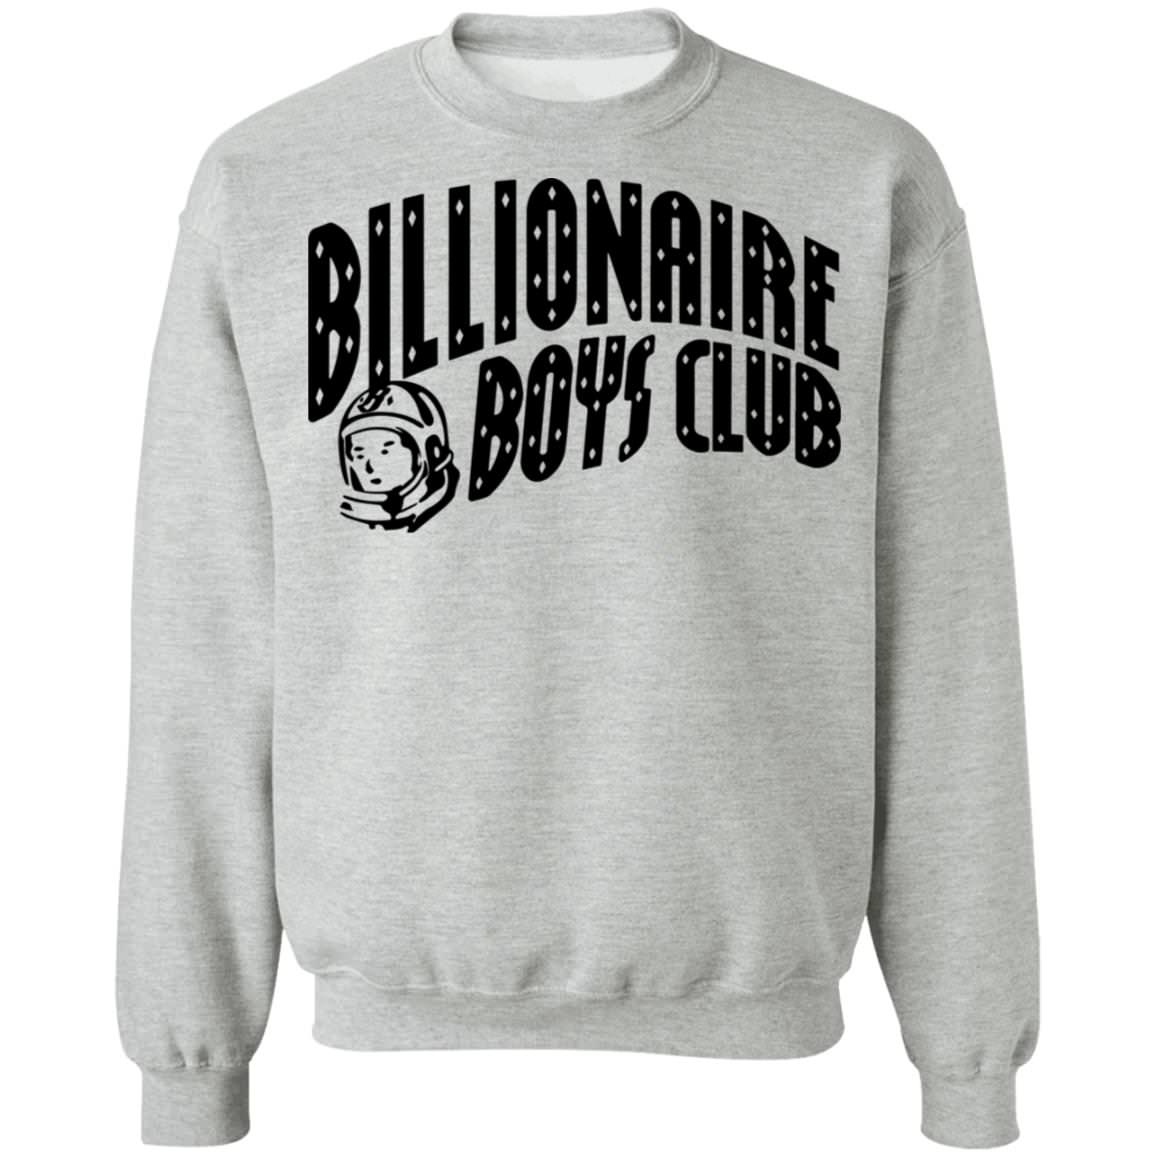 Billionaire Boys Club Shirt Unisex Sweatshirt